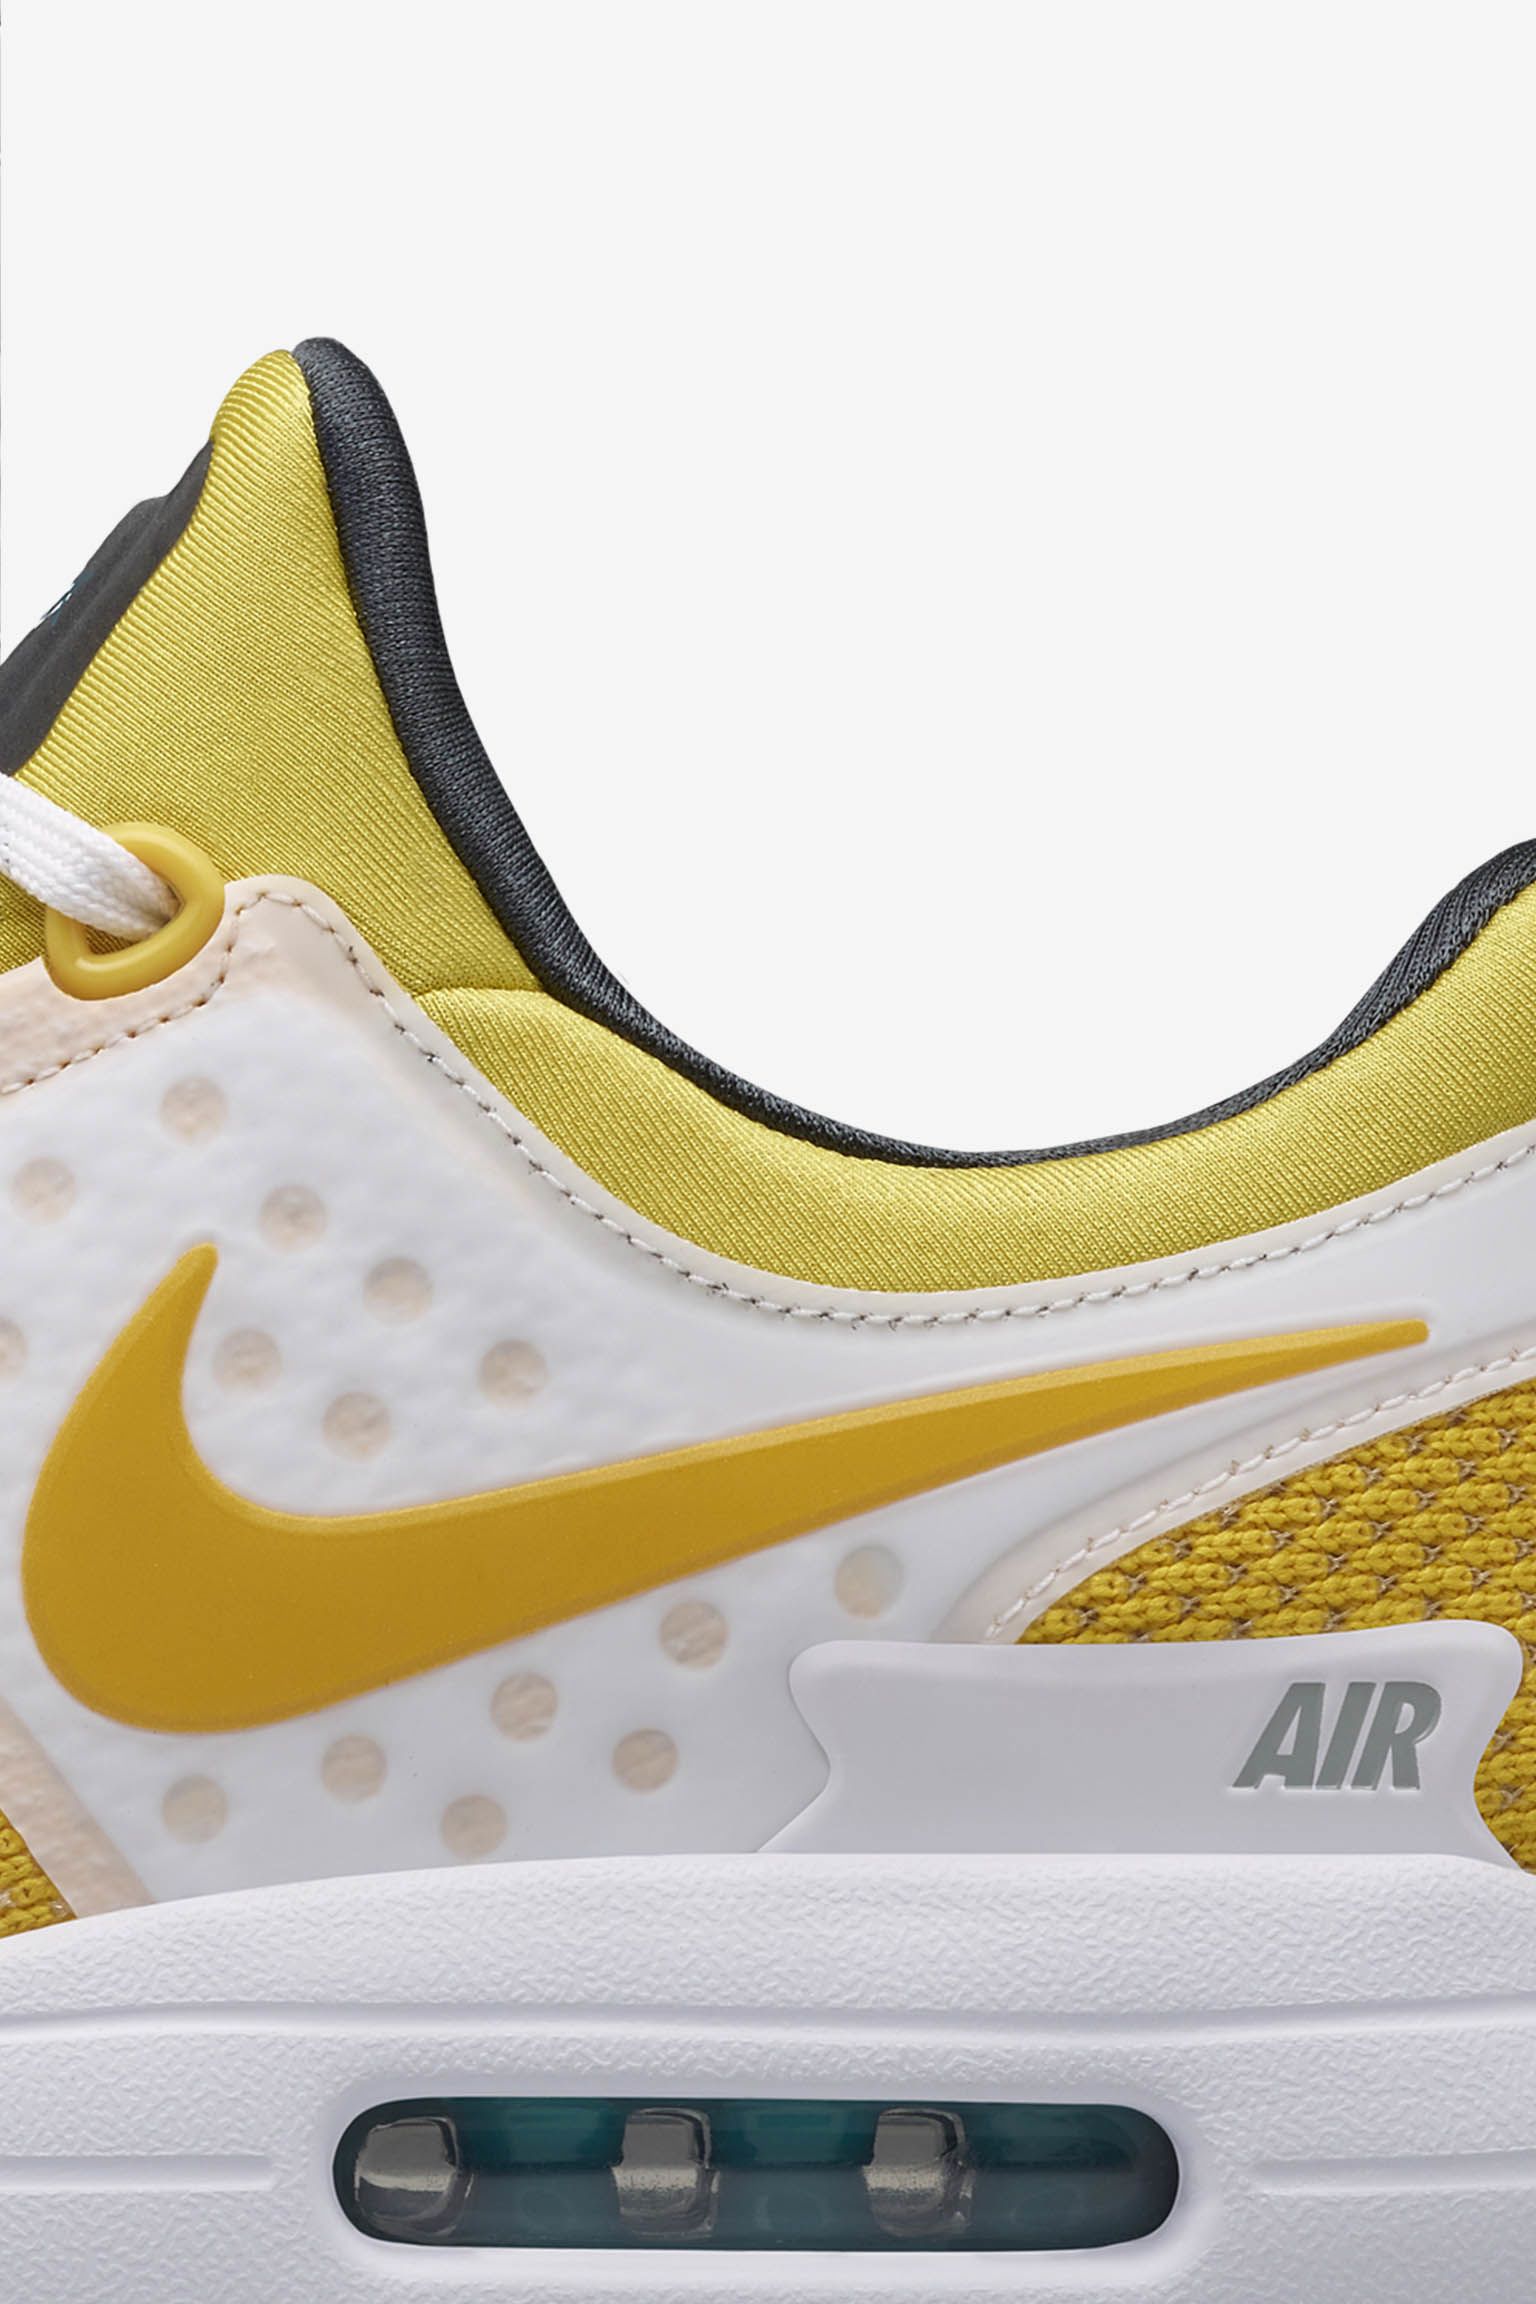 Nike Air Max Zero 'Yellow' Release Date. Nike SNKRS